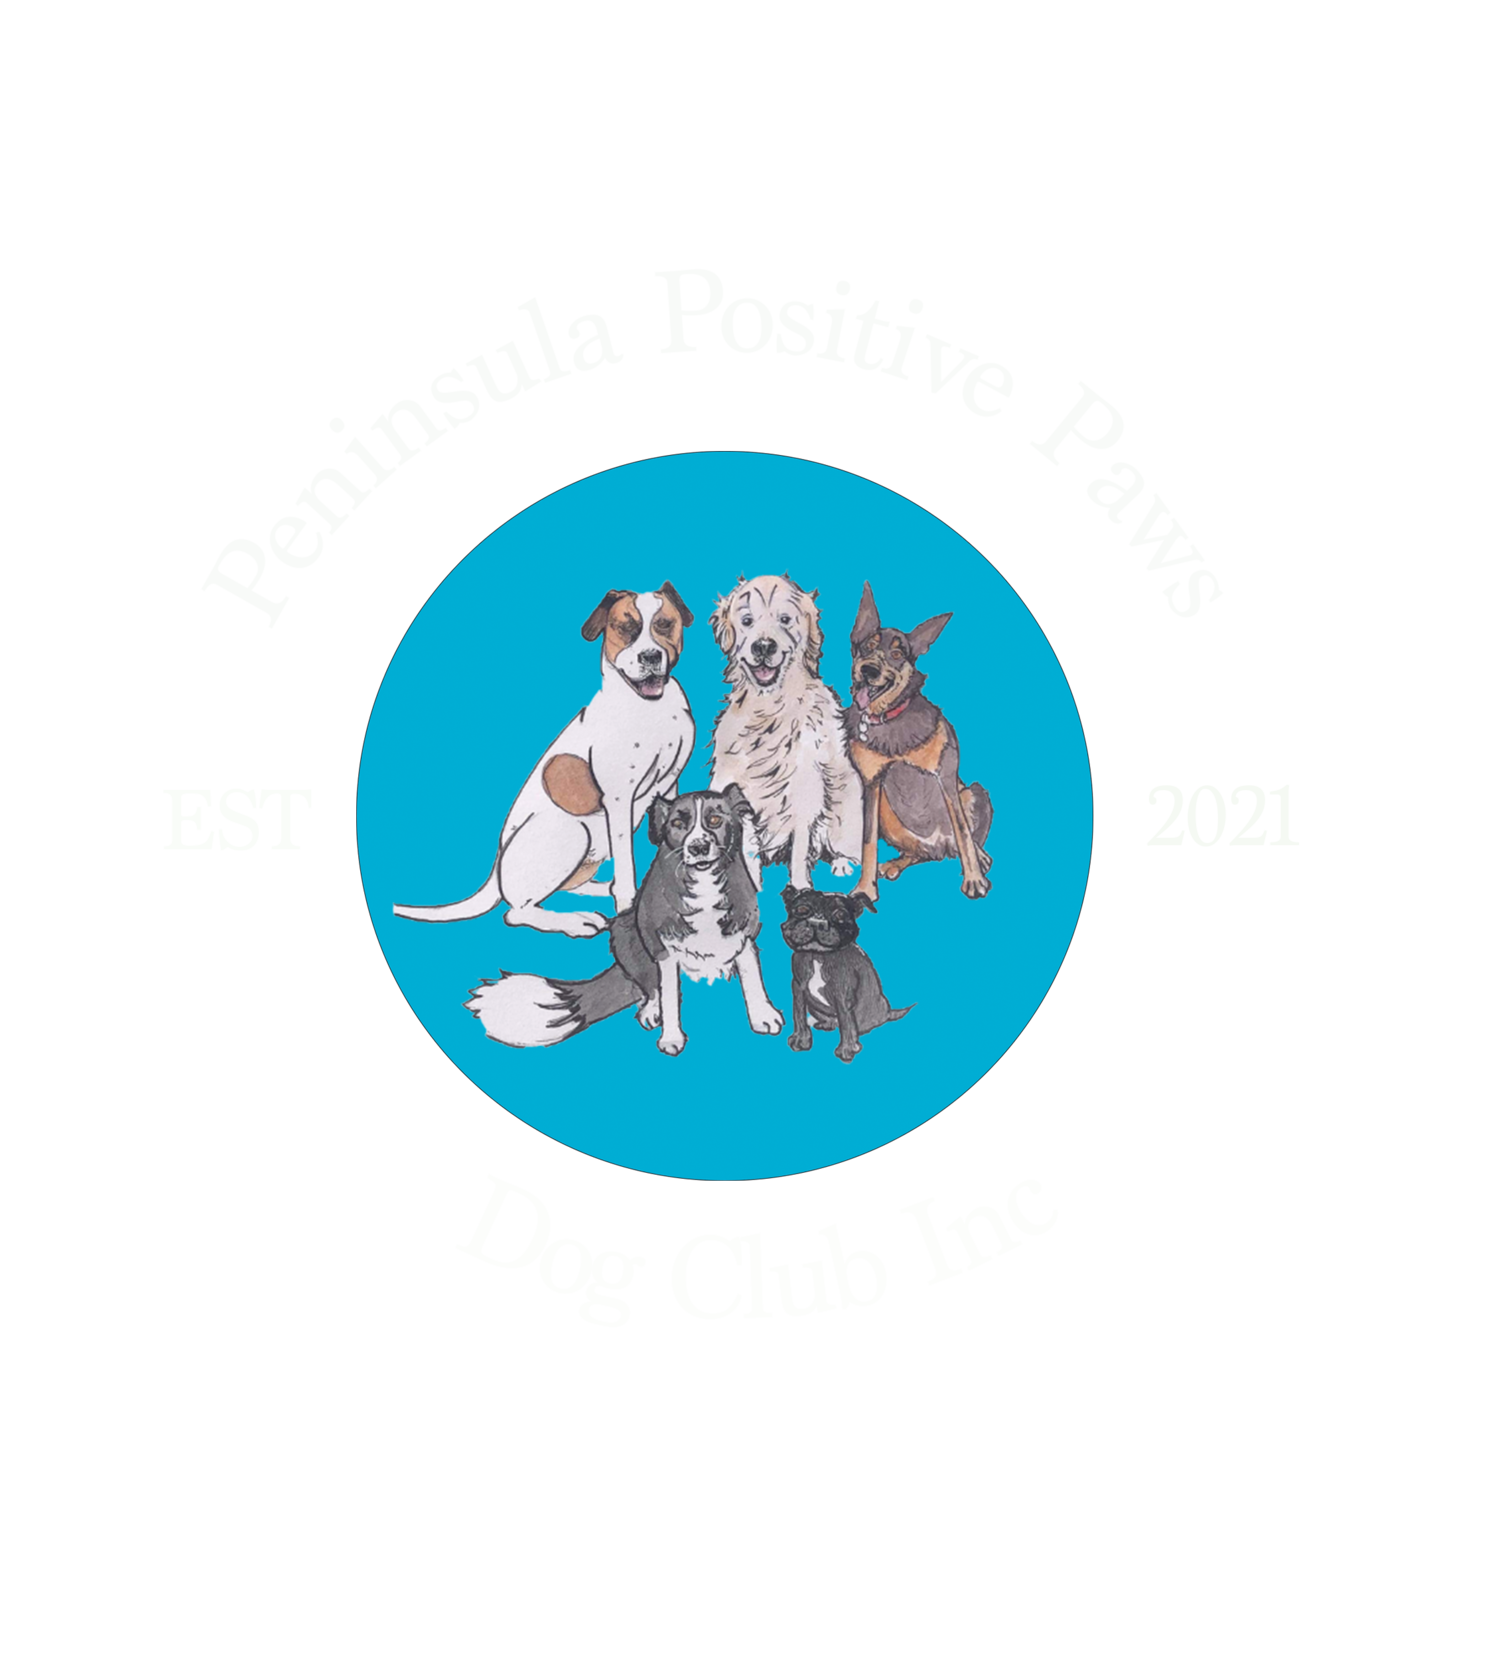 Peninsula Positive Paws Dog Club Inc.